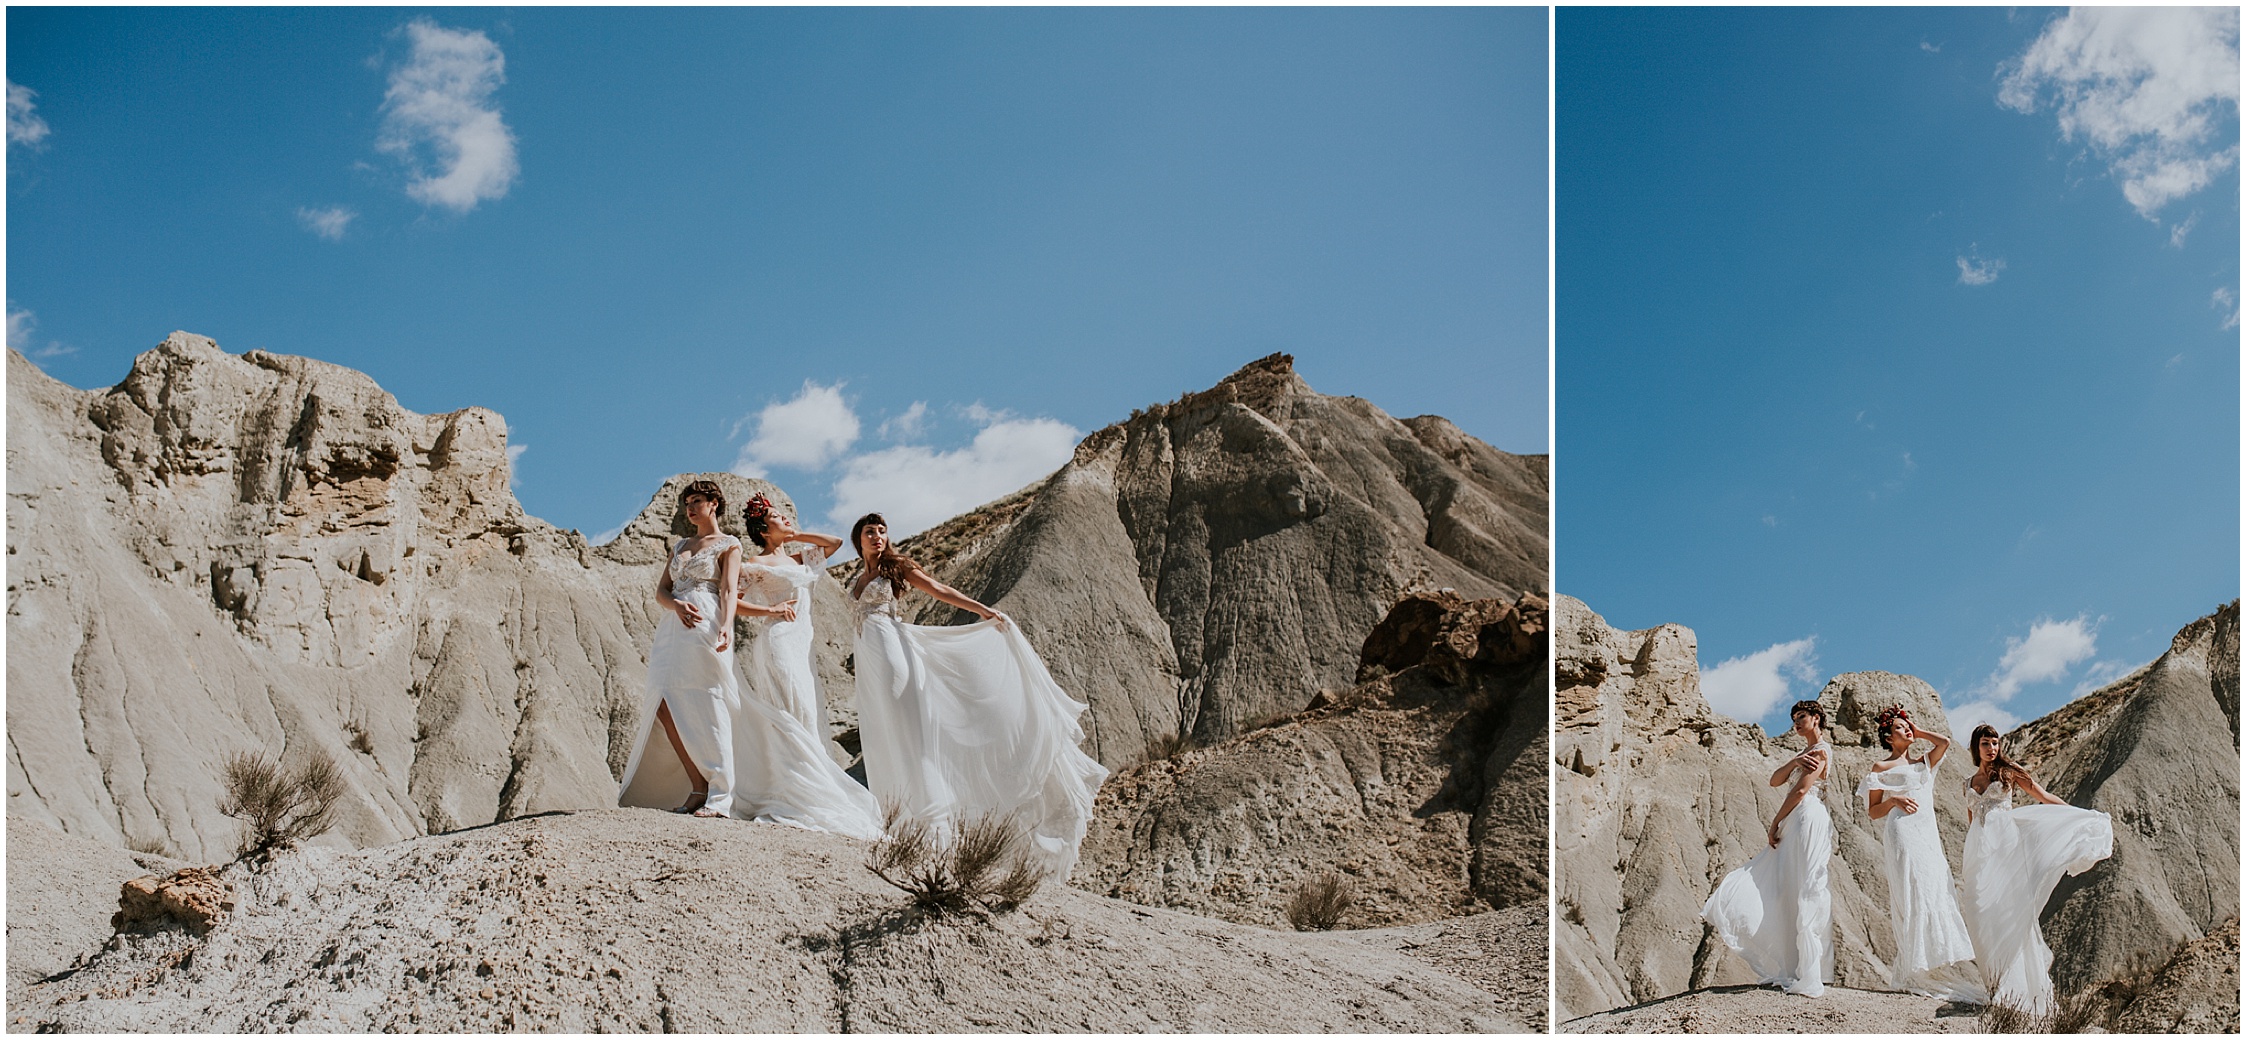 Desert wedding inspiration 